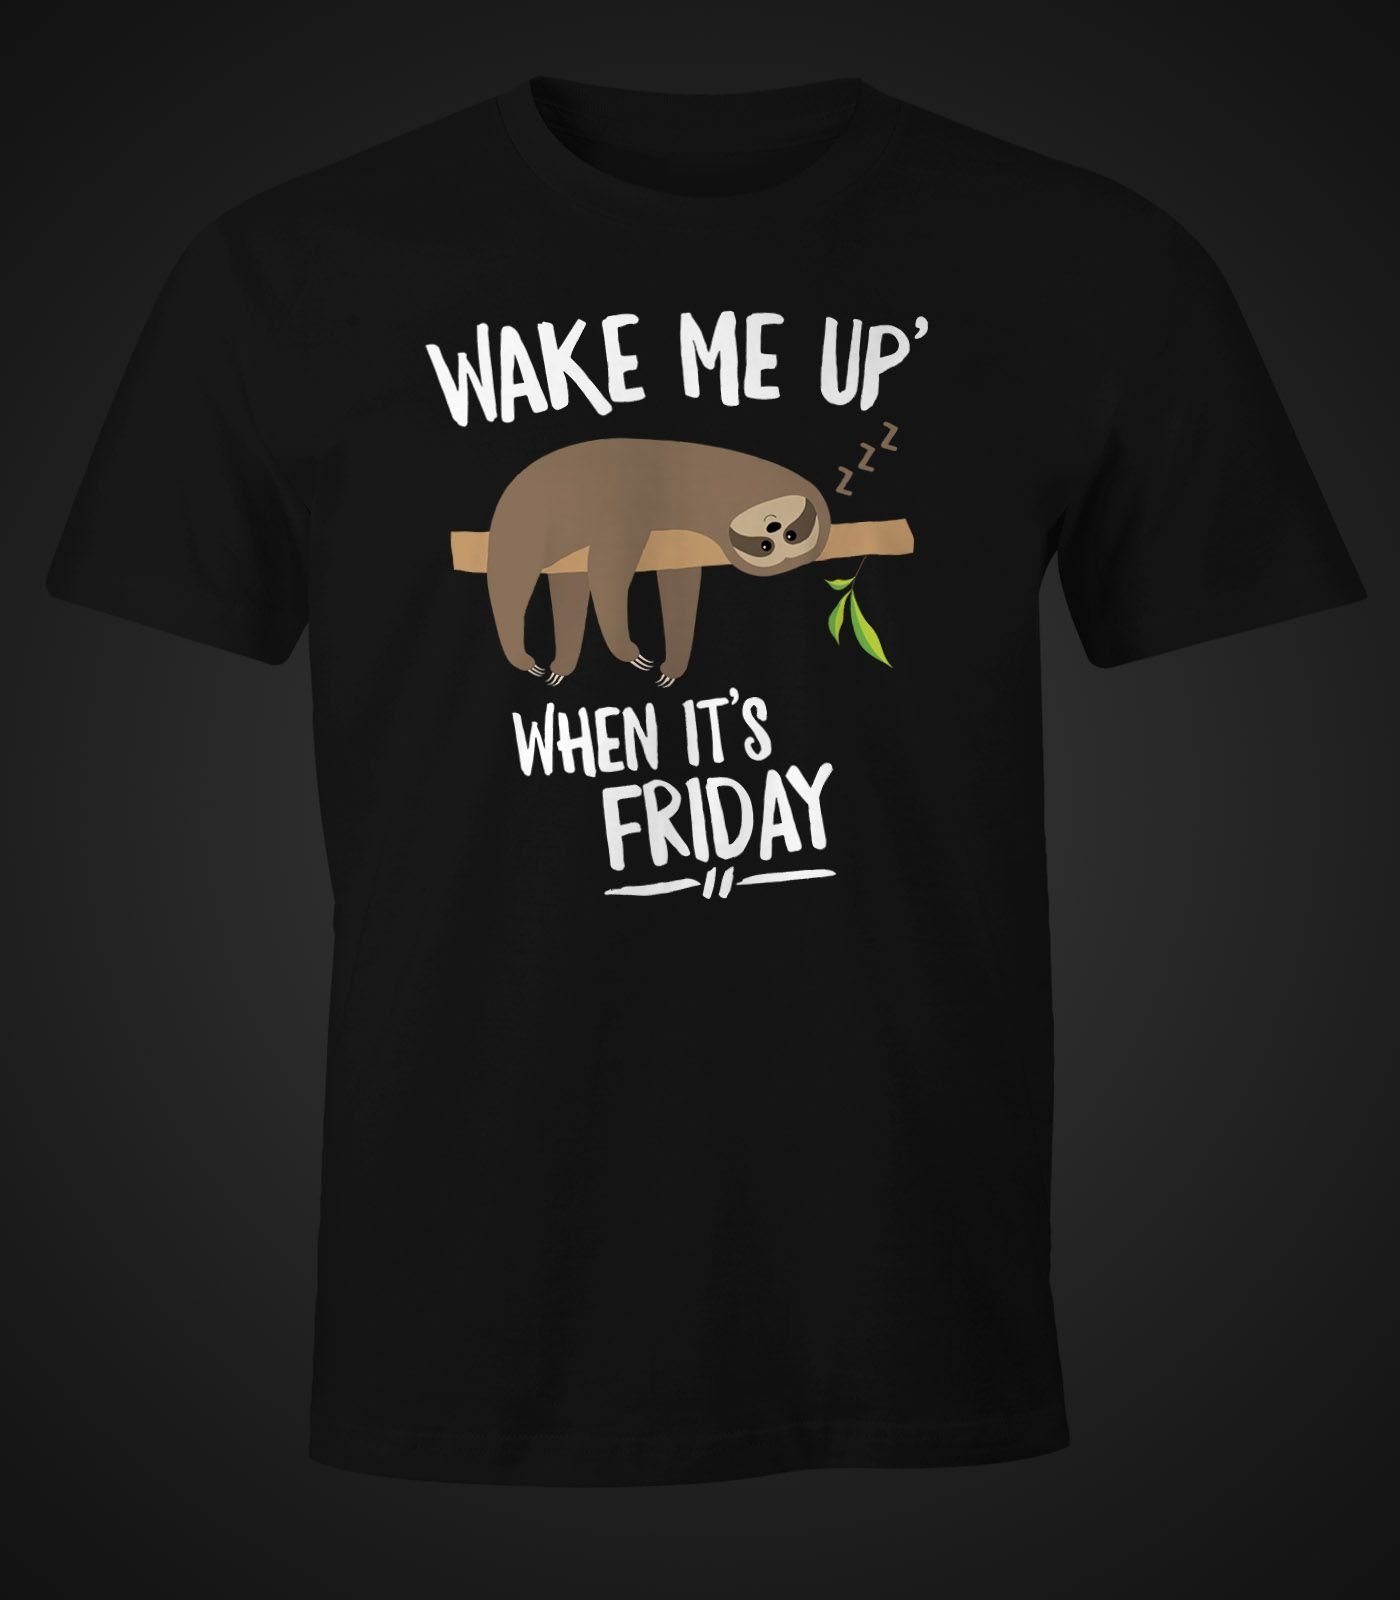 Friday Fun-Shirt it's Moonworks® when schwarz mit Wake Sloth me Print-Shirt T-Shirt Faultier Print MoonWorks up Herren